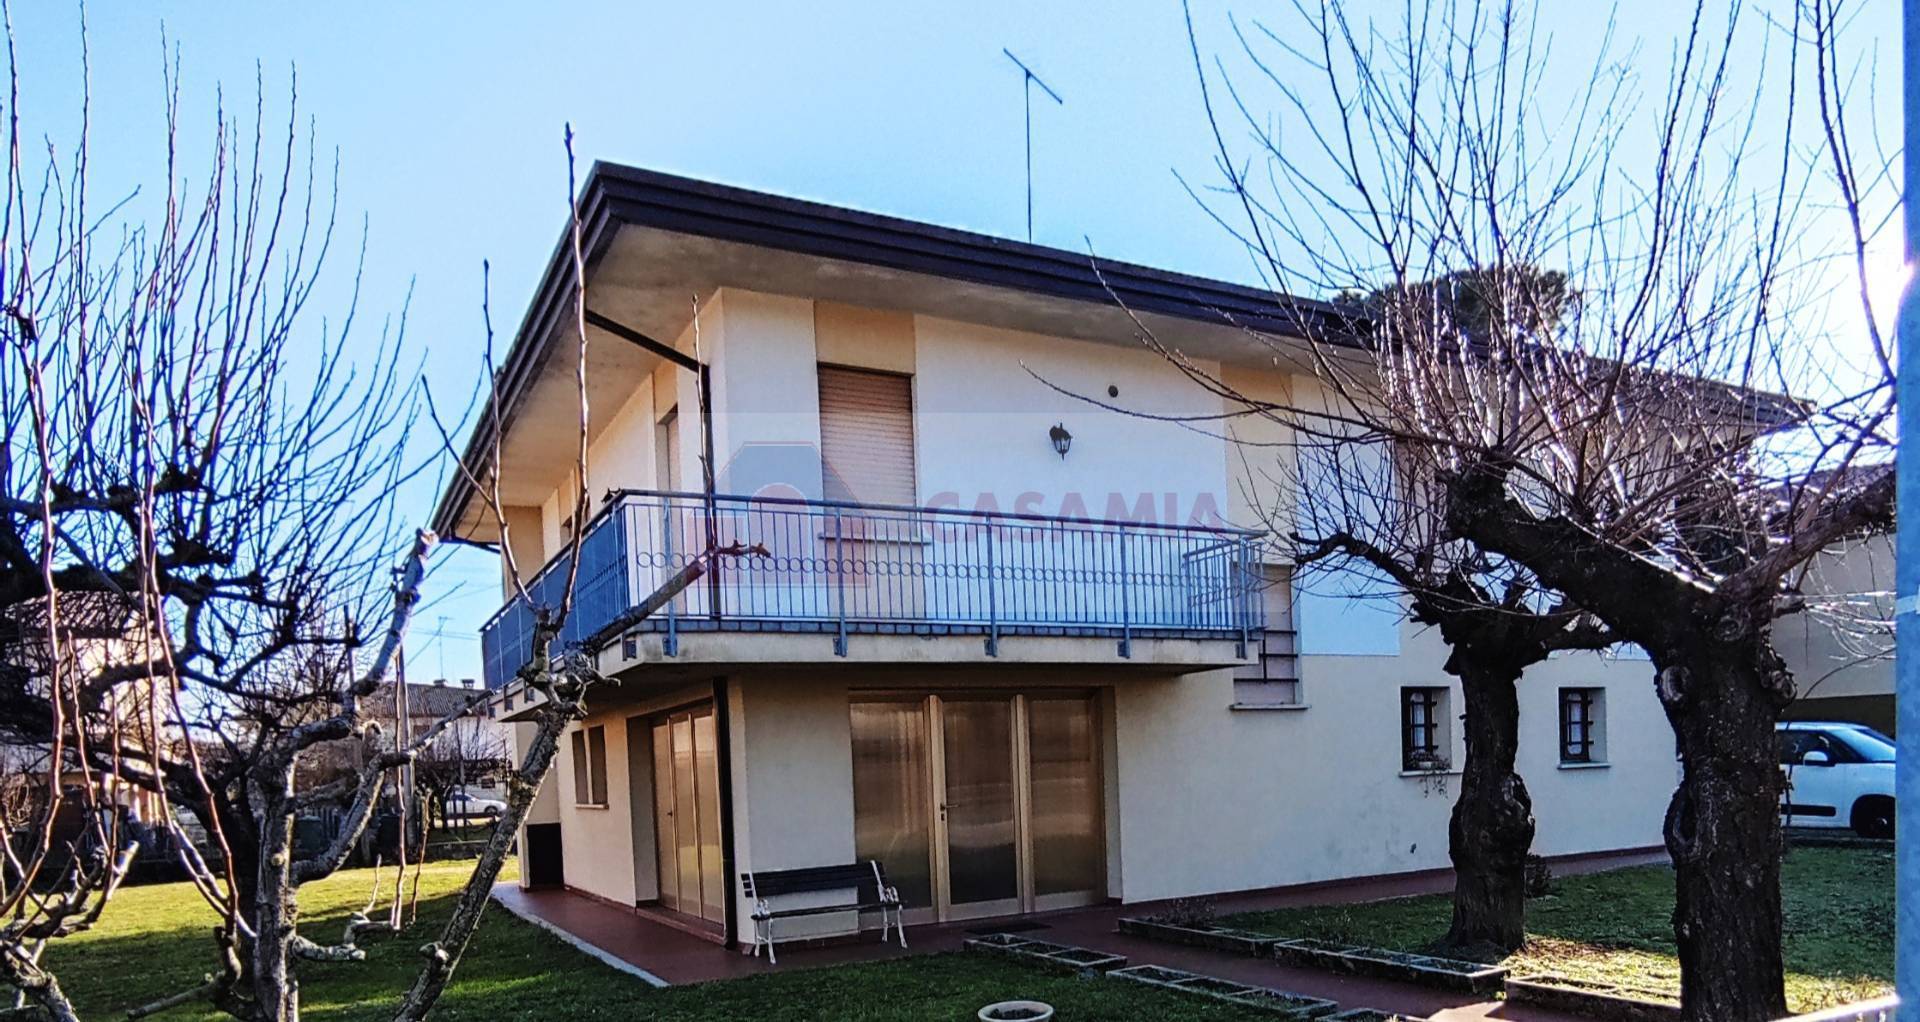 Villa in vendita a Oderzo - Zona: Colfrancui